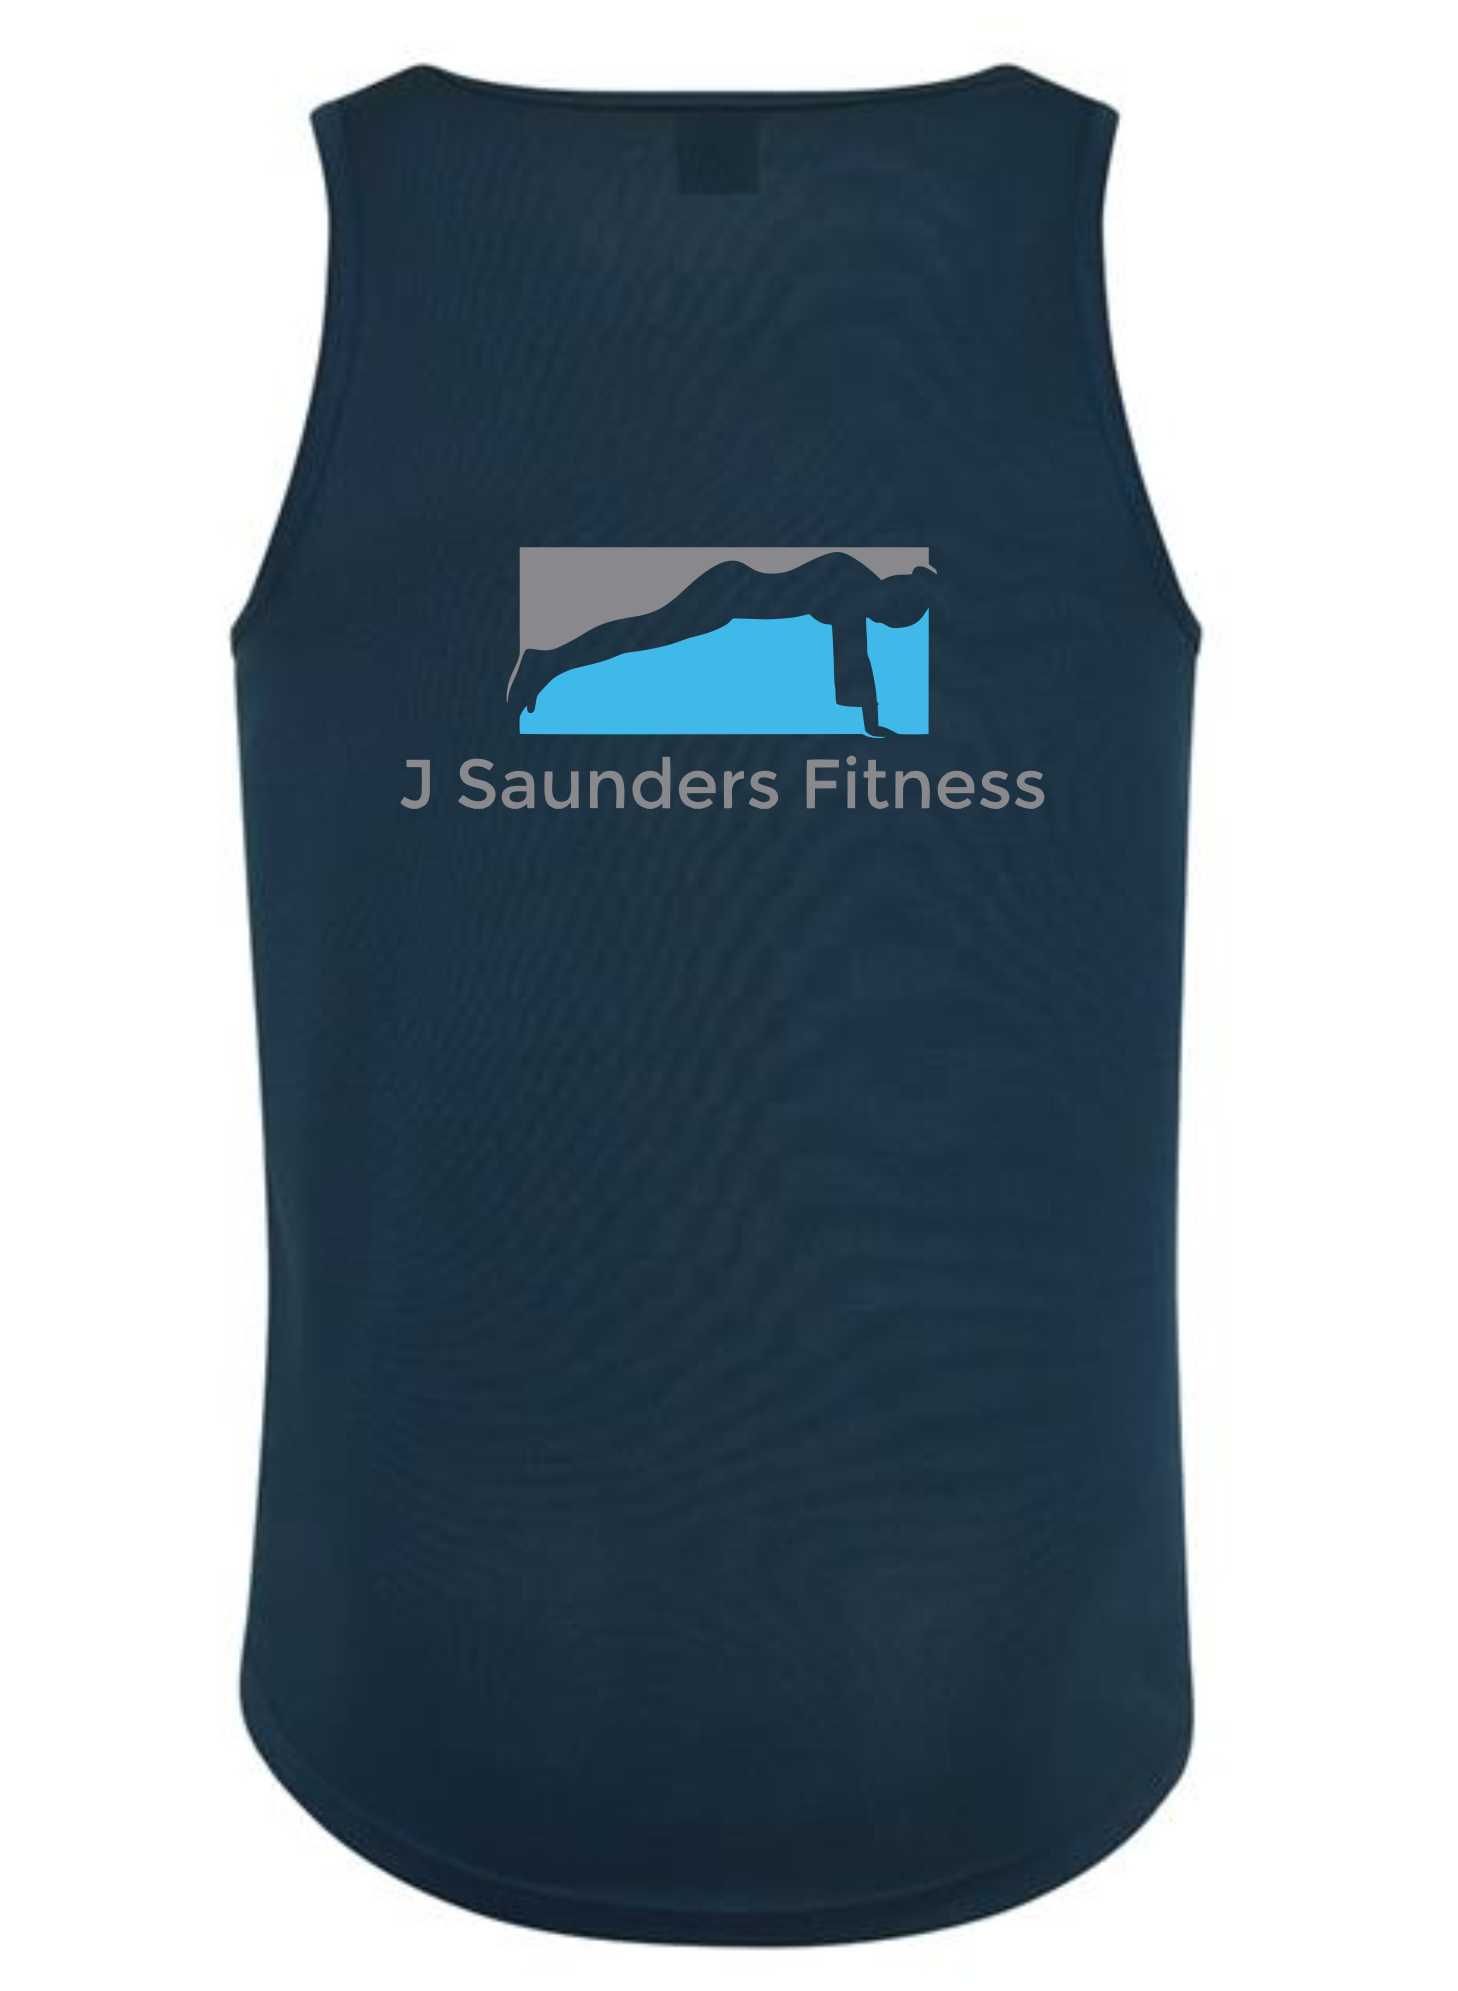 J Saunders Fitness- Men's/Unisex Vest (Front & Back)